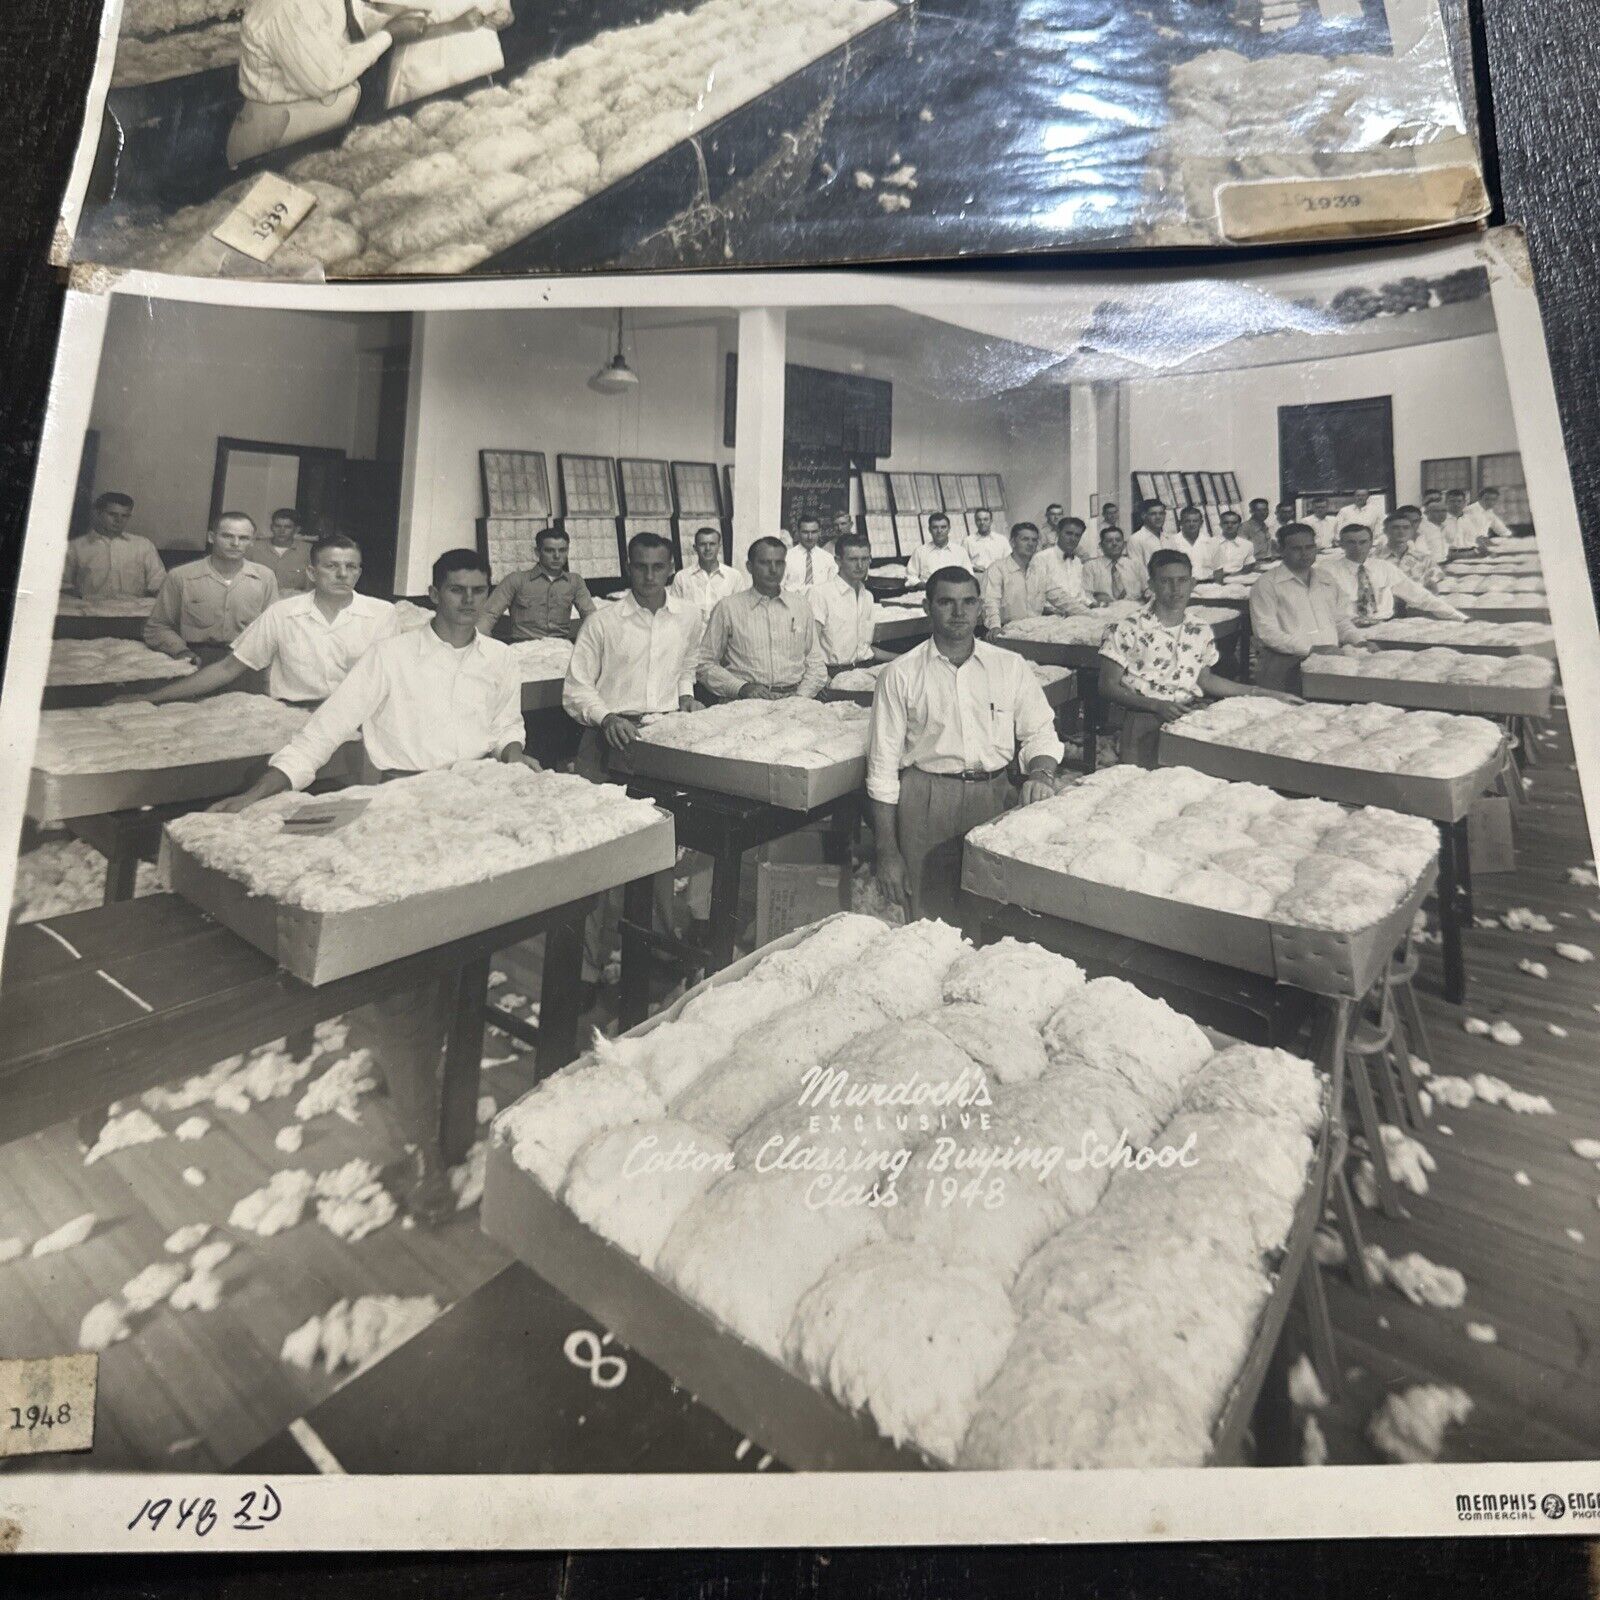 Cotton Classing Buying School Class 1948 Photo Murdoch Exclusive Photo Antique